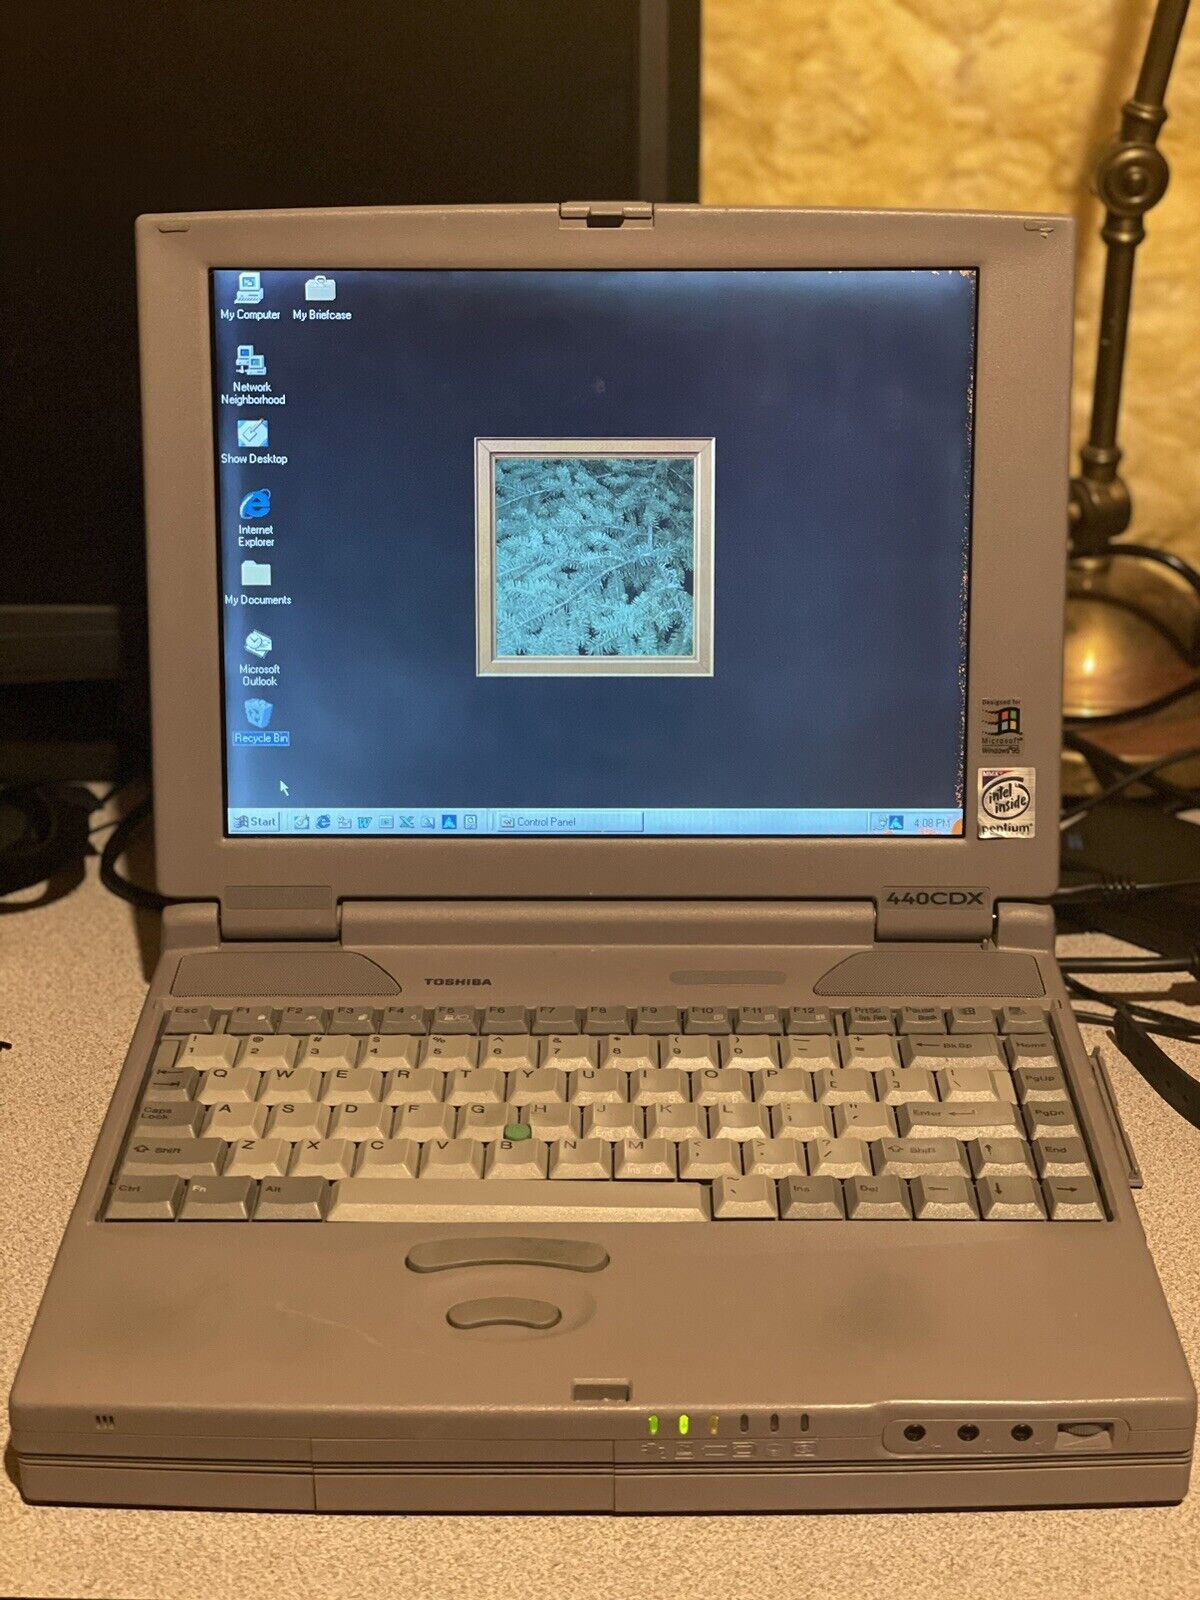 Vintage Toshiba Satellite Pro 440CDX Windows 95 Pentium 133MHz 48MB RAM 4GB HDD